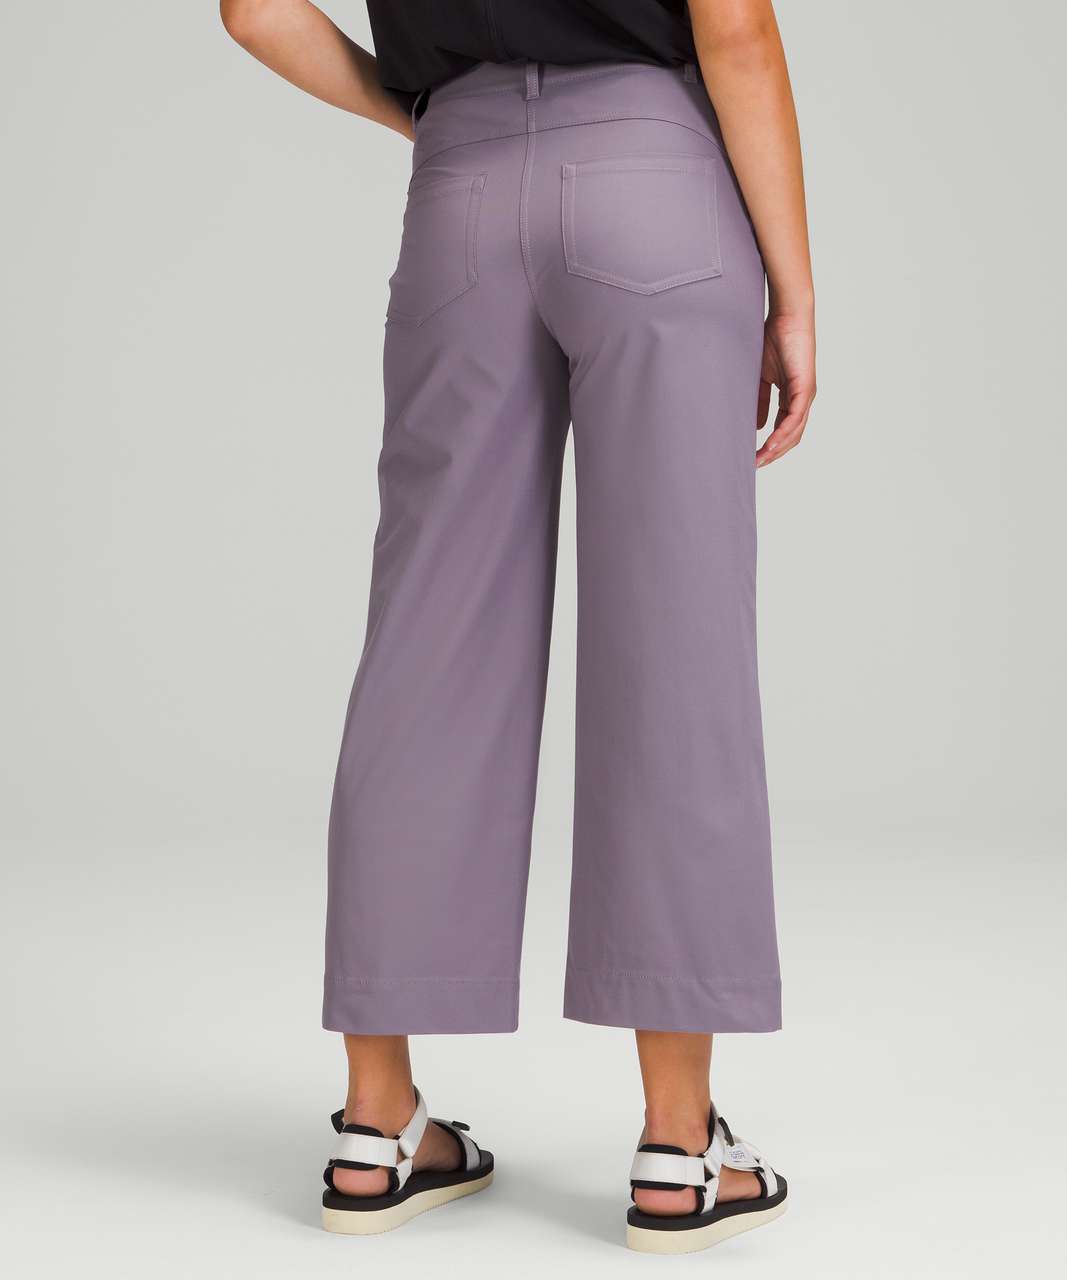 Lululemon City Sleek 5 Pocket Wide-Leg High Rise 7/8 Length Pant - Dusky Lavender